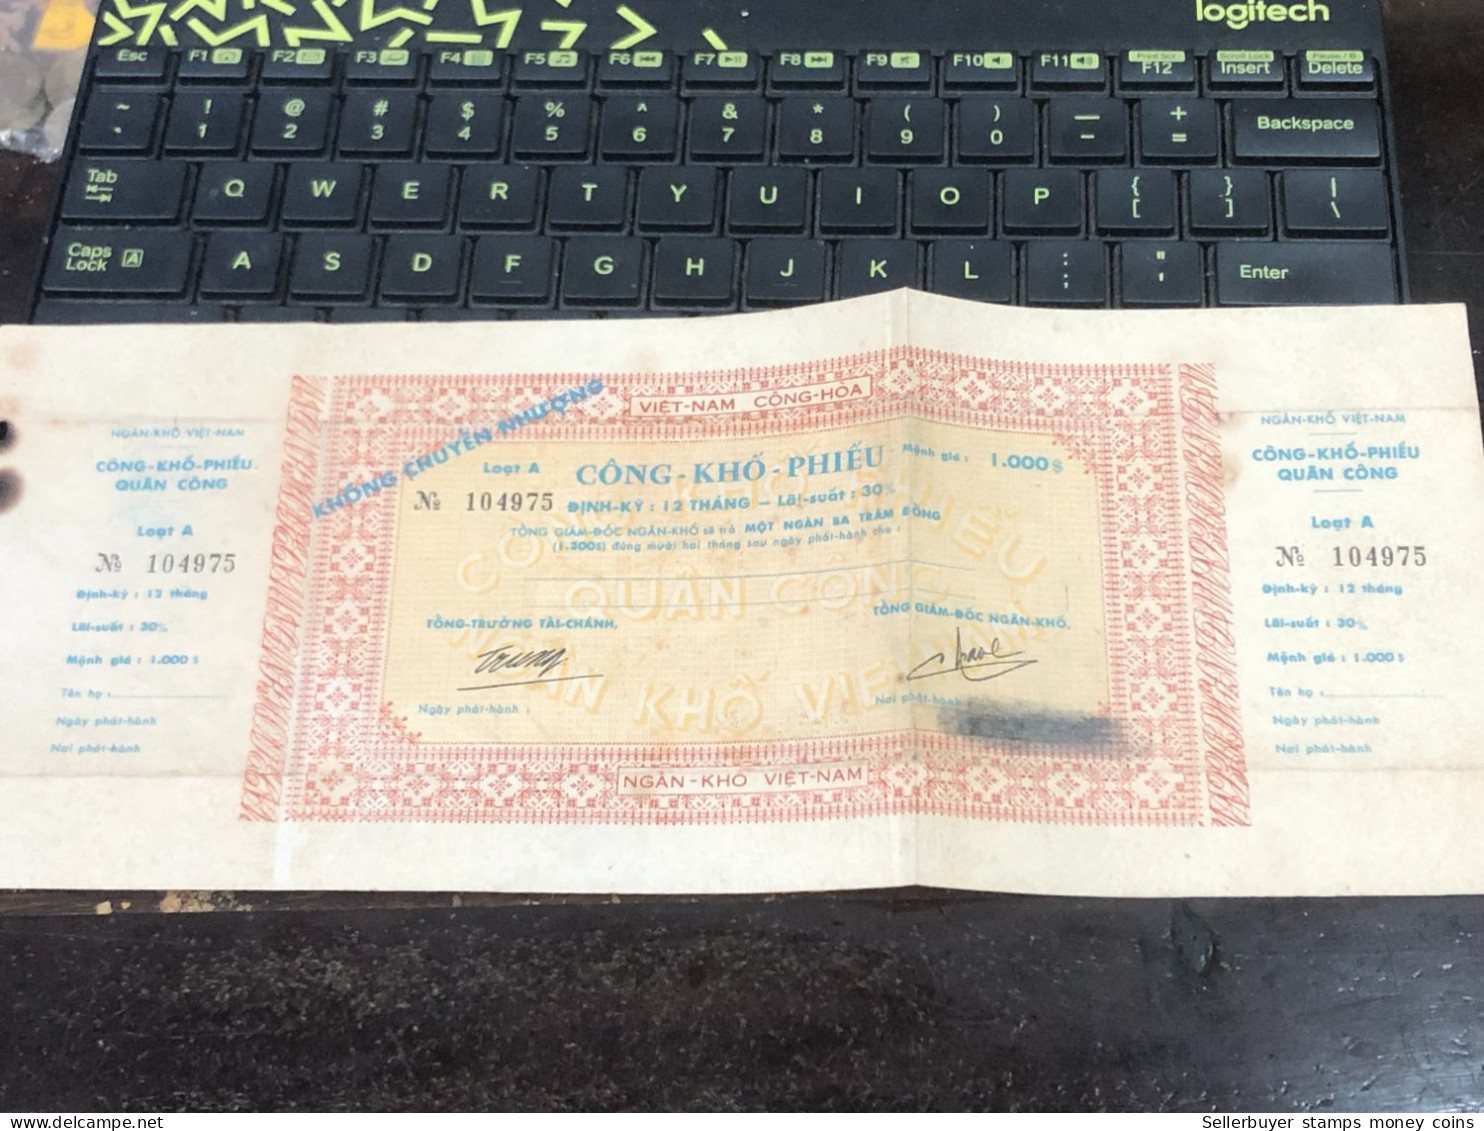 VIET NAM SOUTH CONG VIETNAM TREASURY BOND Paper PARVALUE 1000 VND BEFORE 1975/-1PCS RARE - Assegni & Assegni Di Viaggio